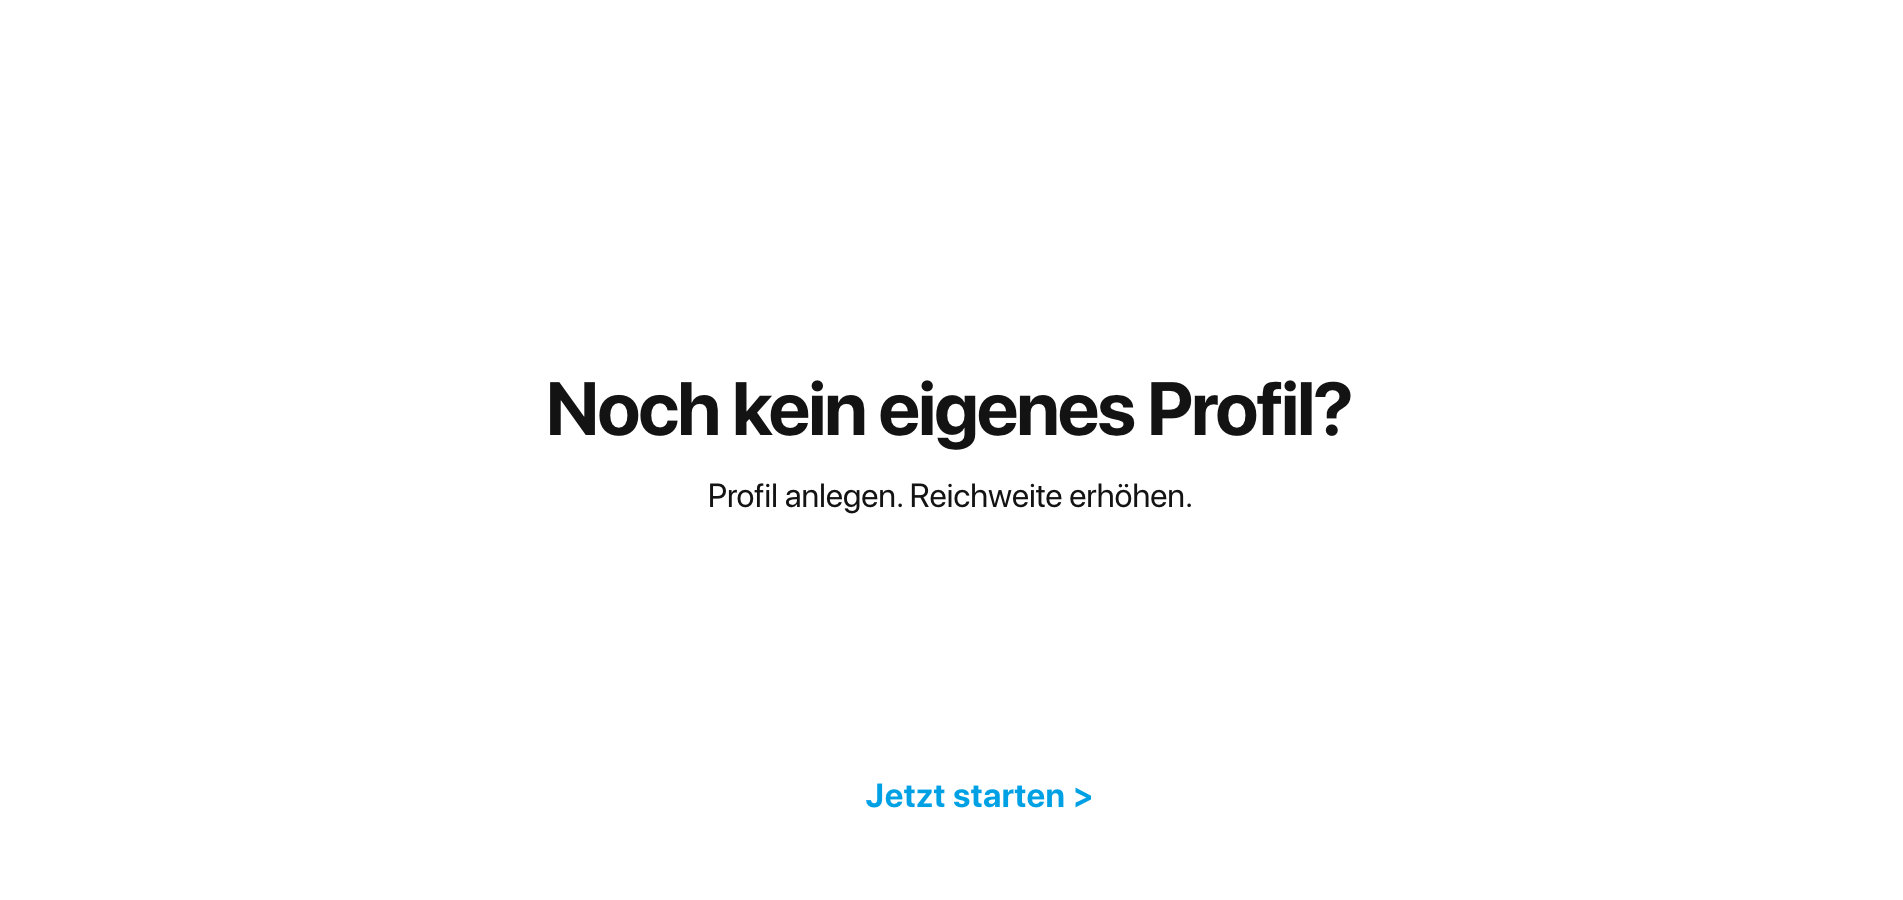 Noch kein eigenes Profil? Jetzt starten! | Creators-Centre.de